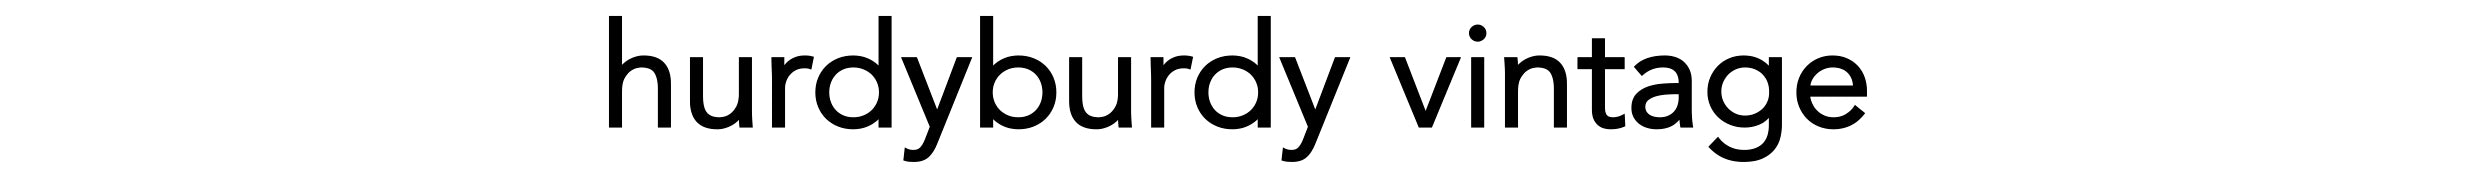 logo for vintage shop hurdyburdy vintage